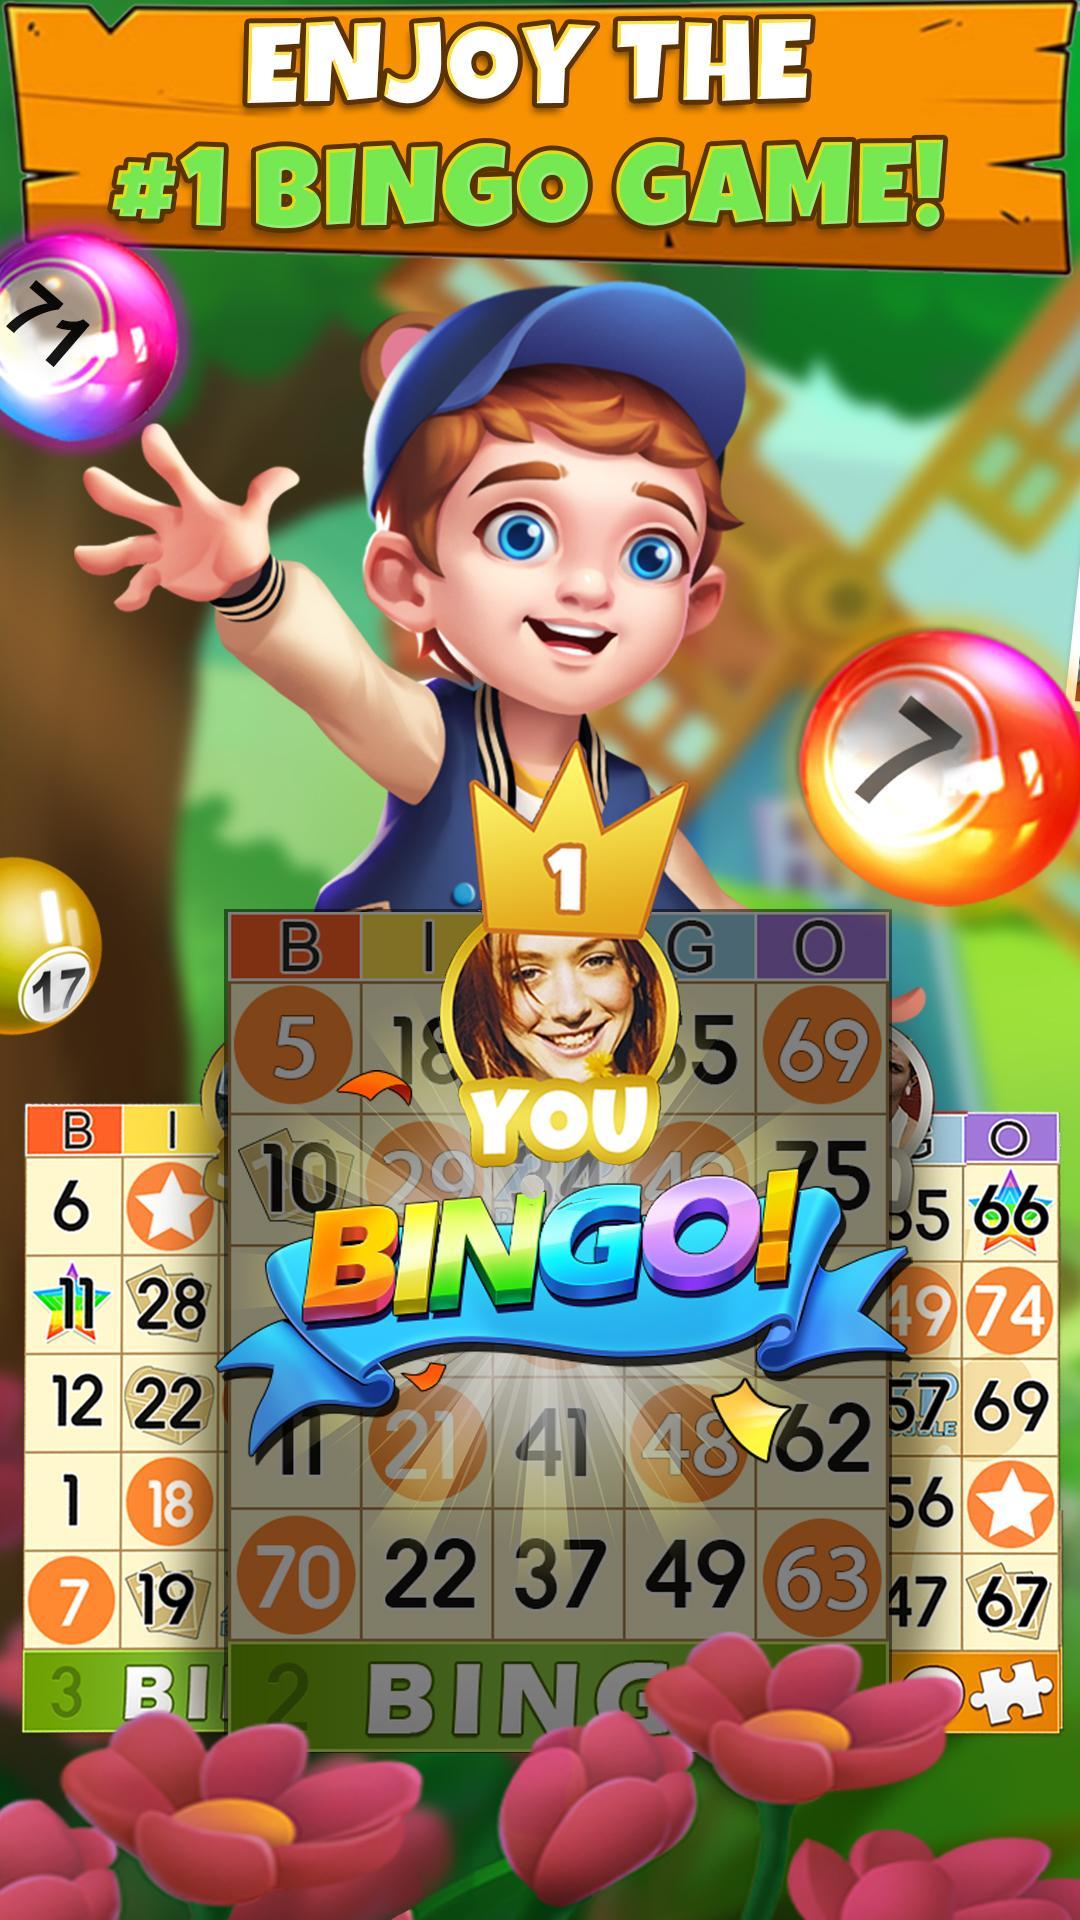 Bingo Party Free Bingo Games to Play at Home 2.4.2 Screenshot 1